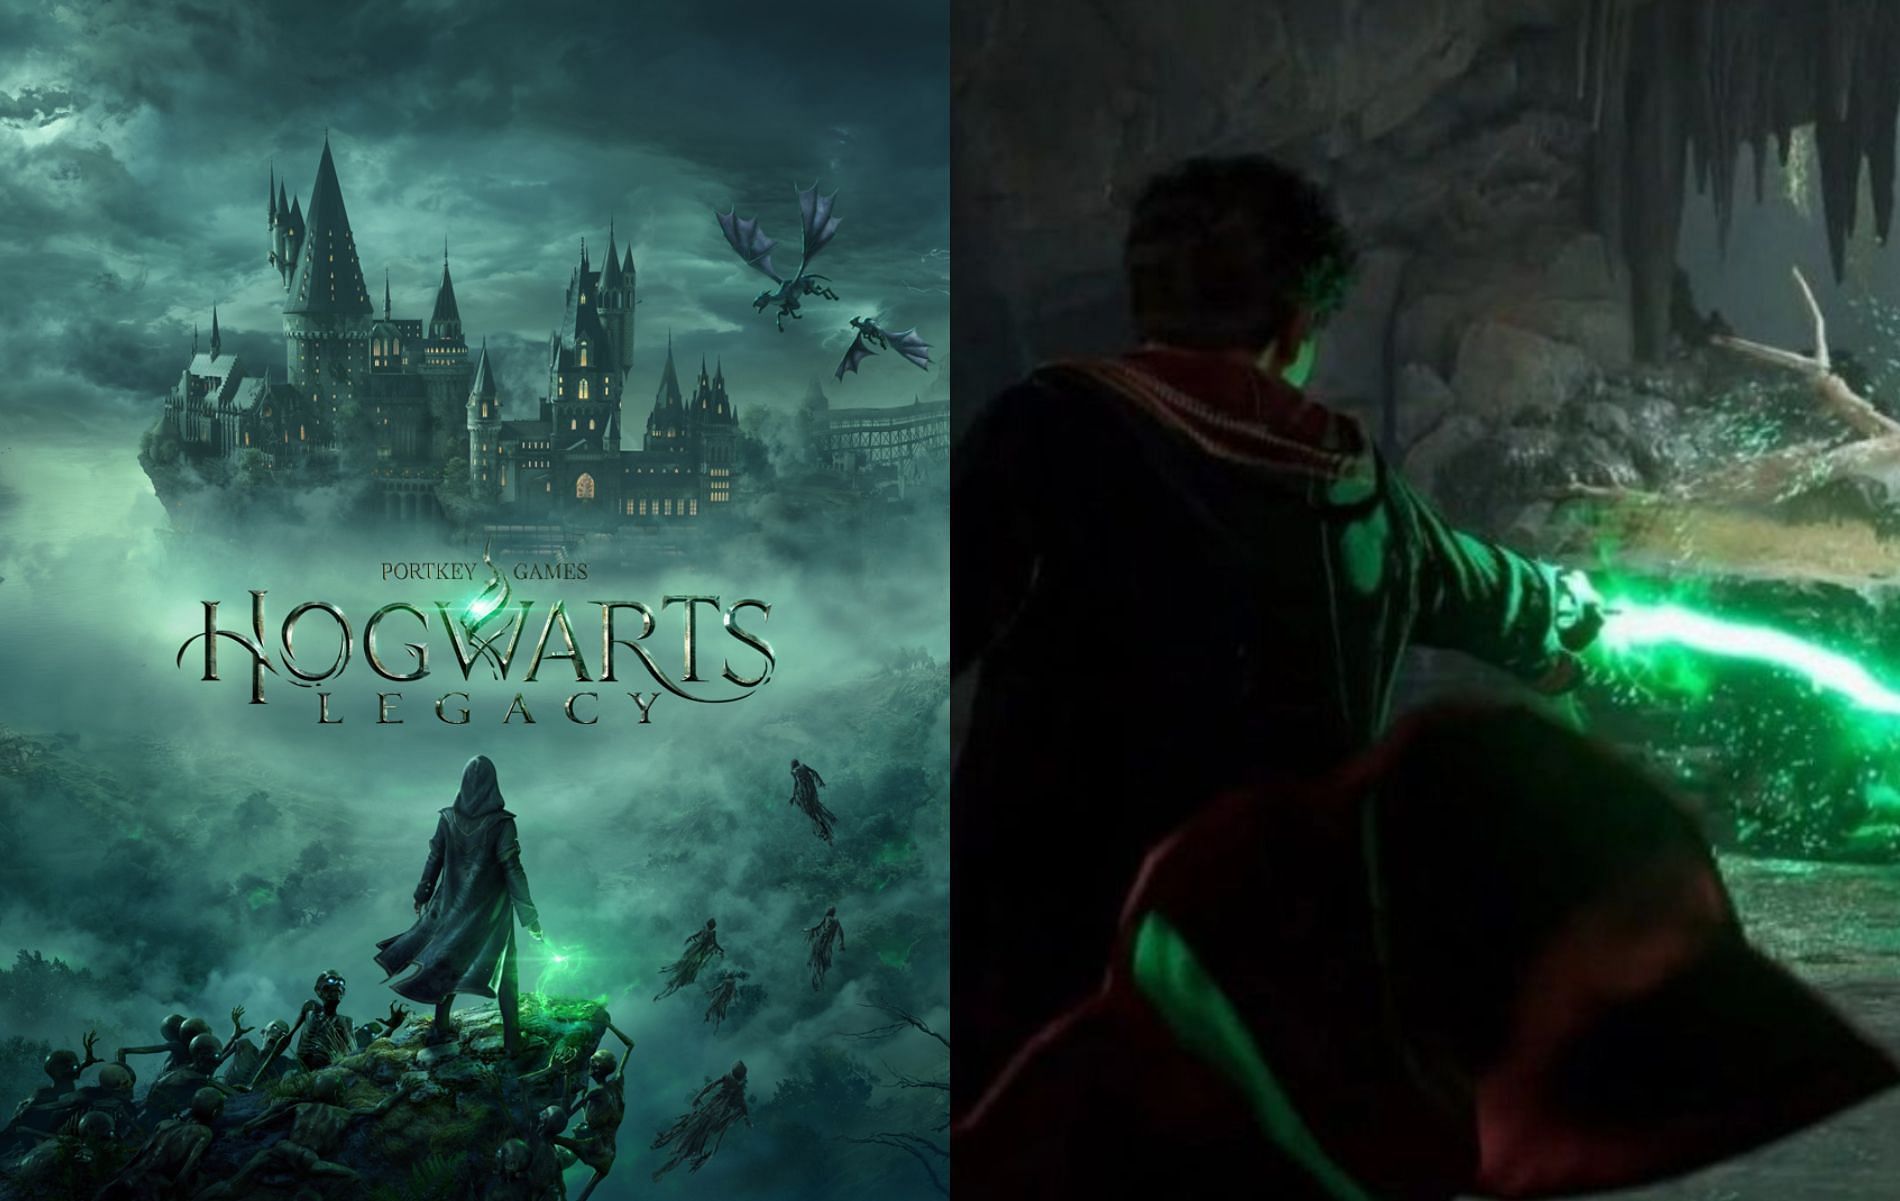 Brandish powers beyond your imagination in Hogwarts Legacy (Images via Warner Bros. Entertainment)